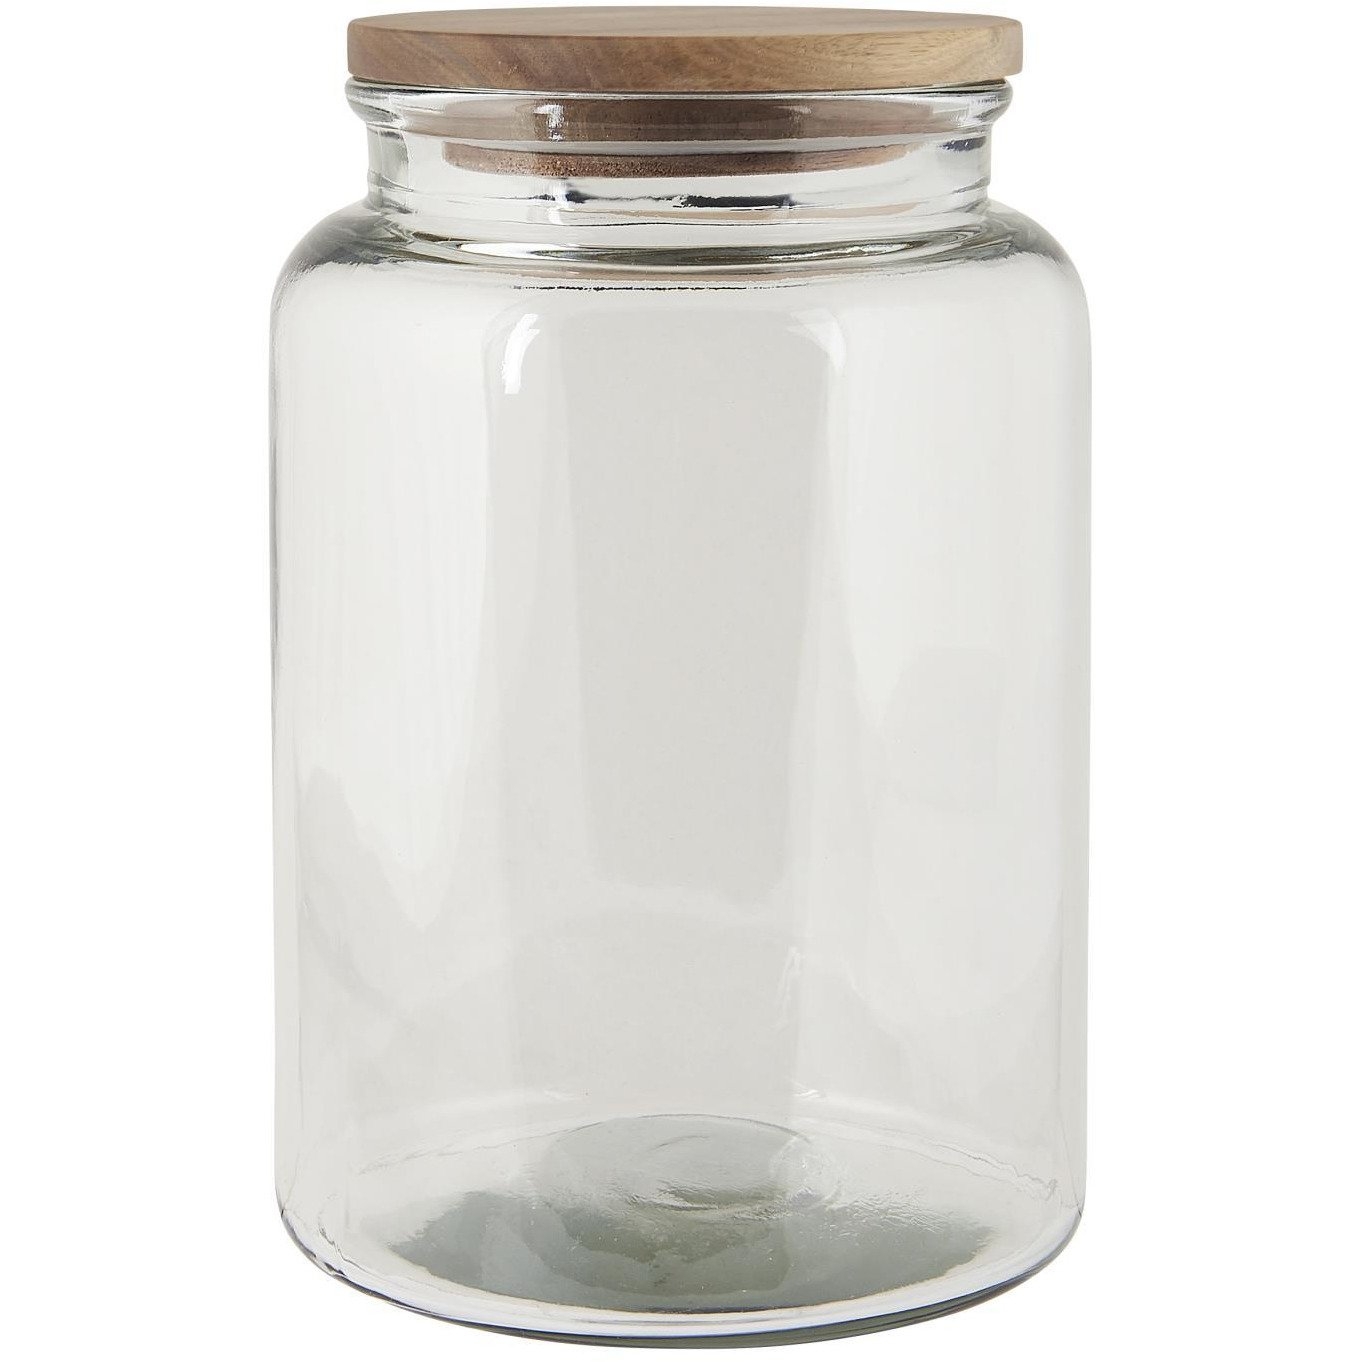 Glass Jar with Wooden Lid Medium